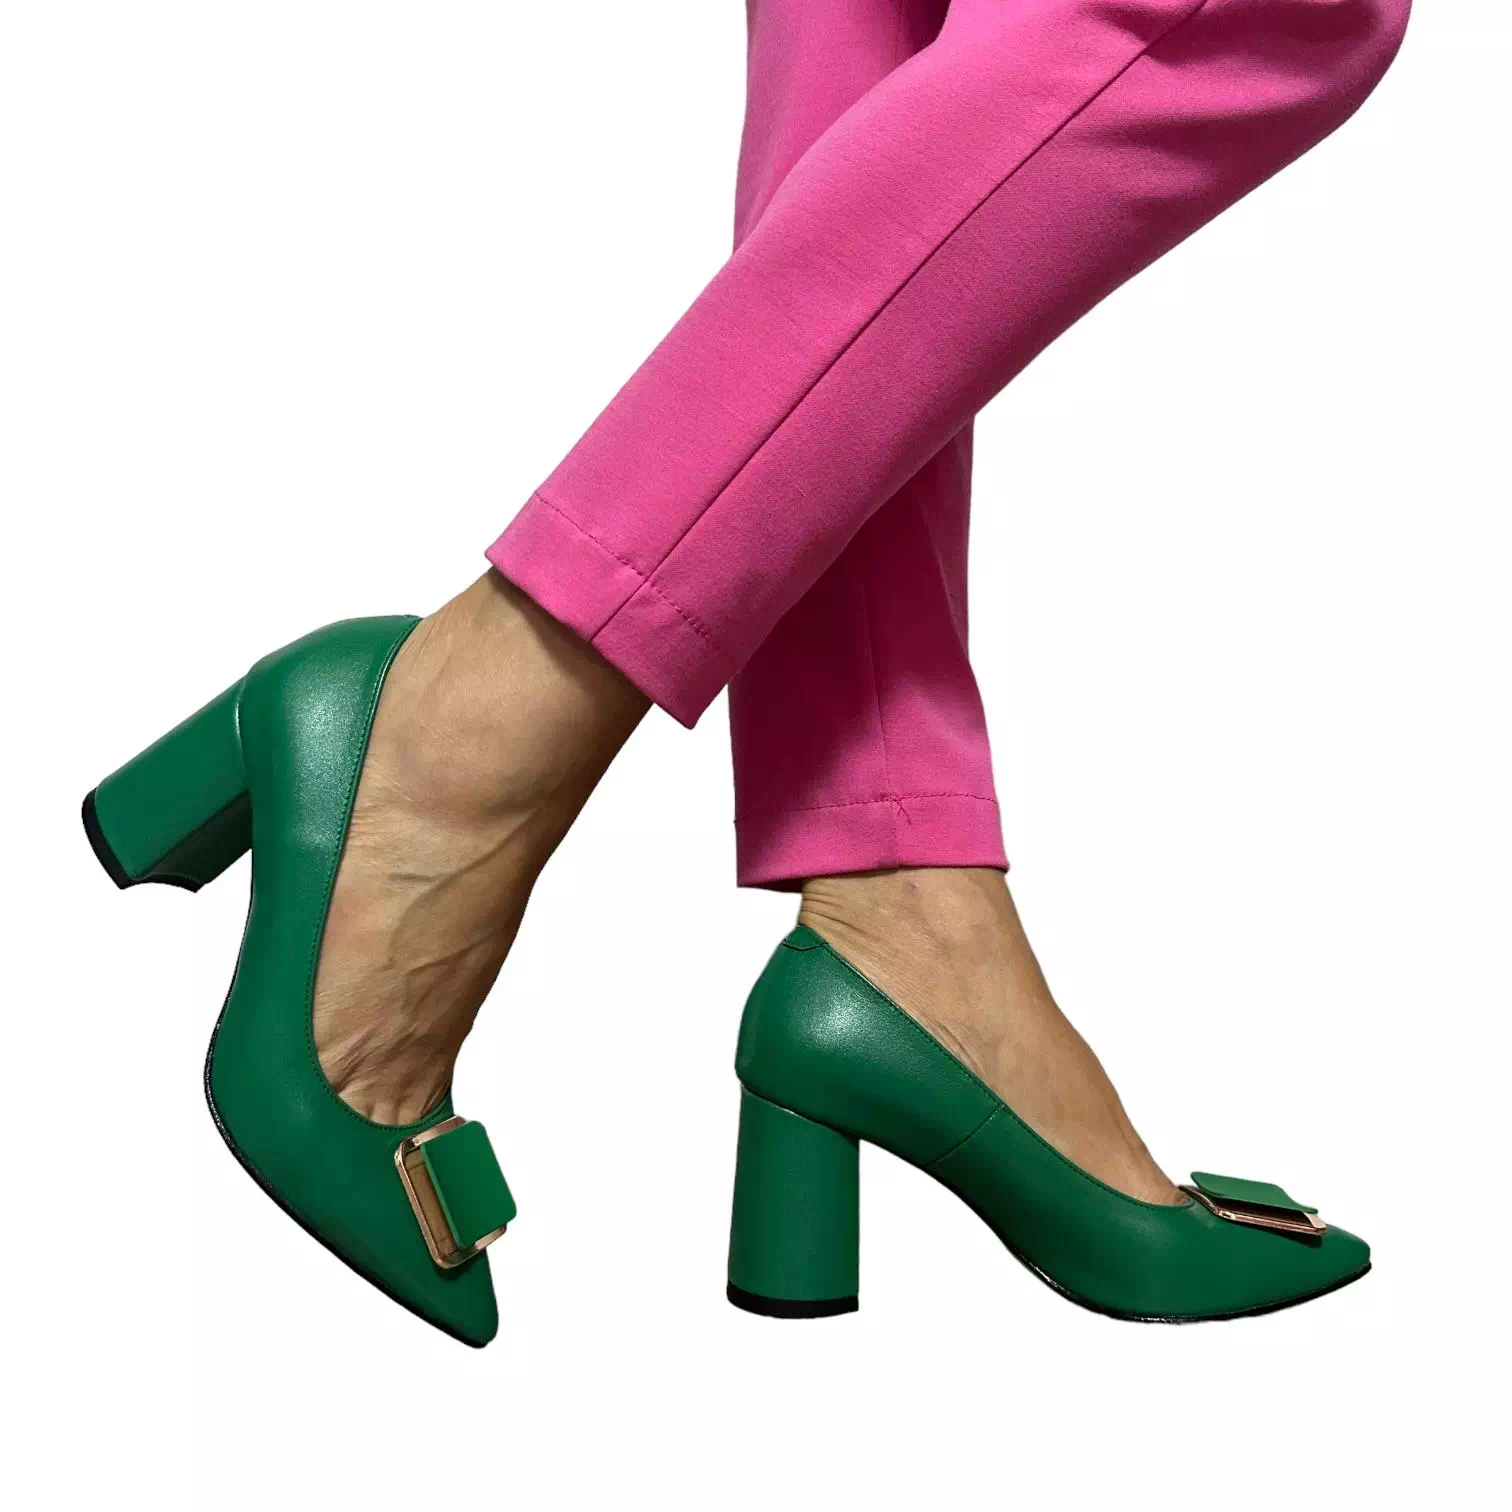 Pantofi Raxela verzi cu accesoriu